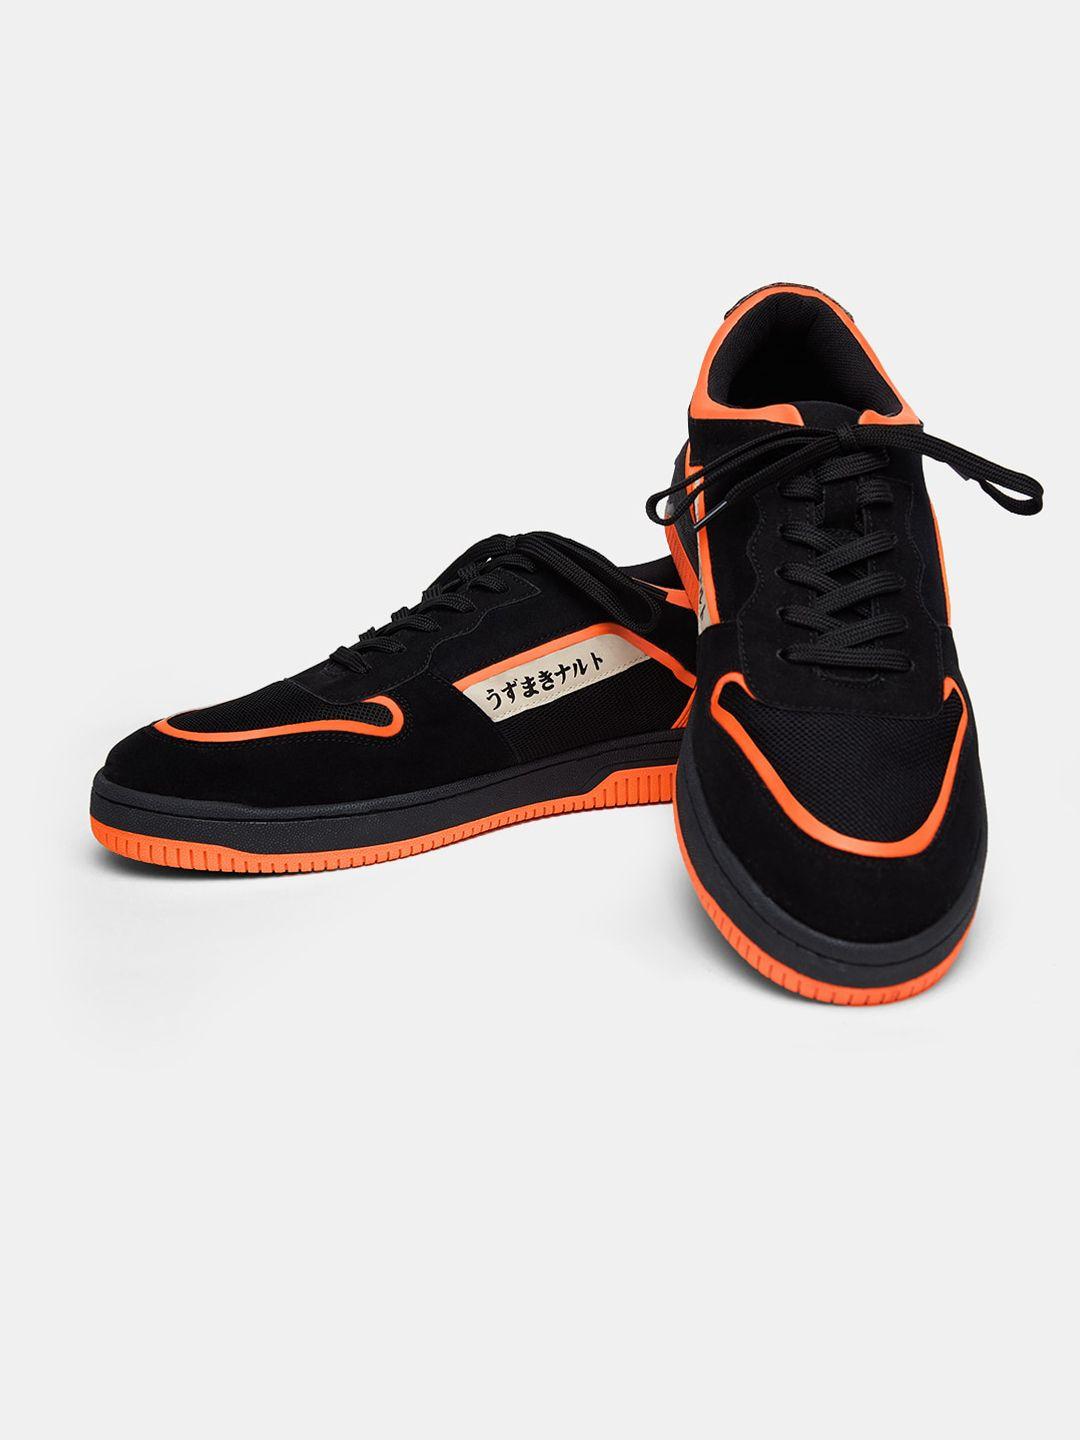 the souled store men black & orange colourblocked leather sneakers